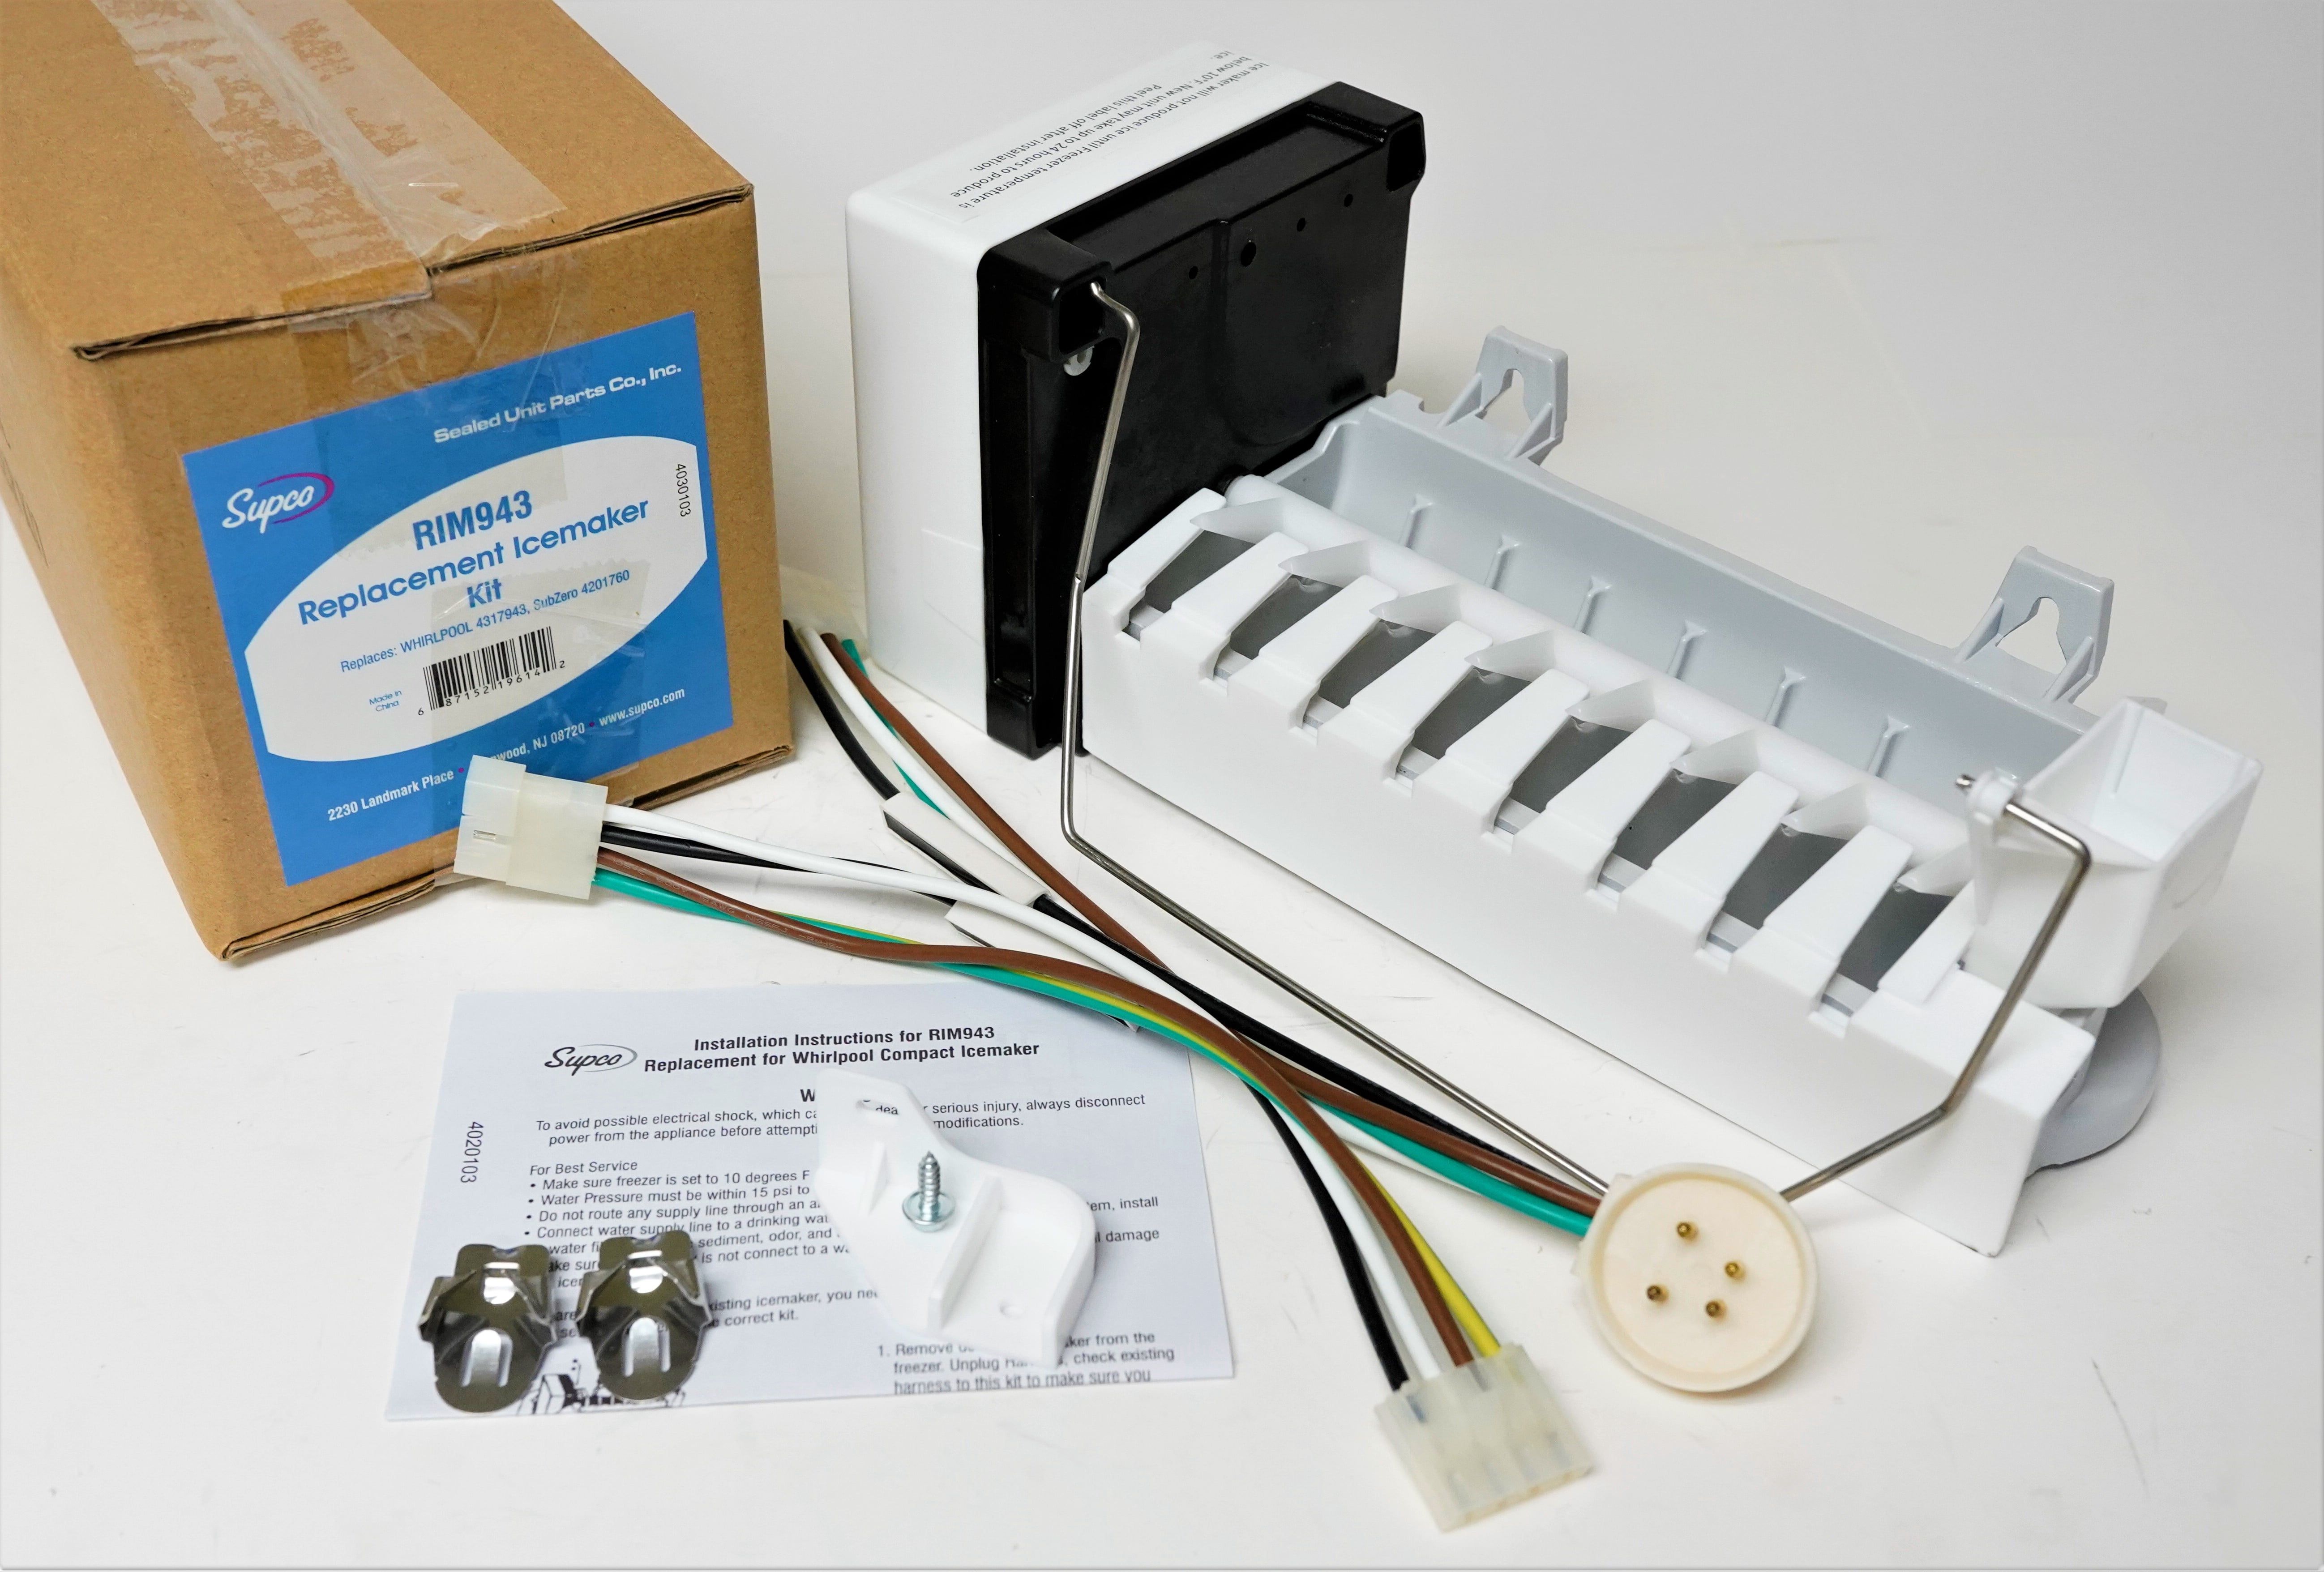 Kitchen Basics 101 5304445222/241642501 Refrigerator Ice Maker Kit Replacement 